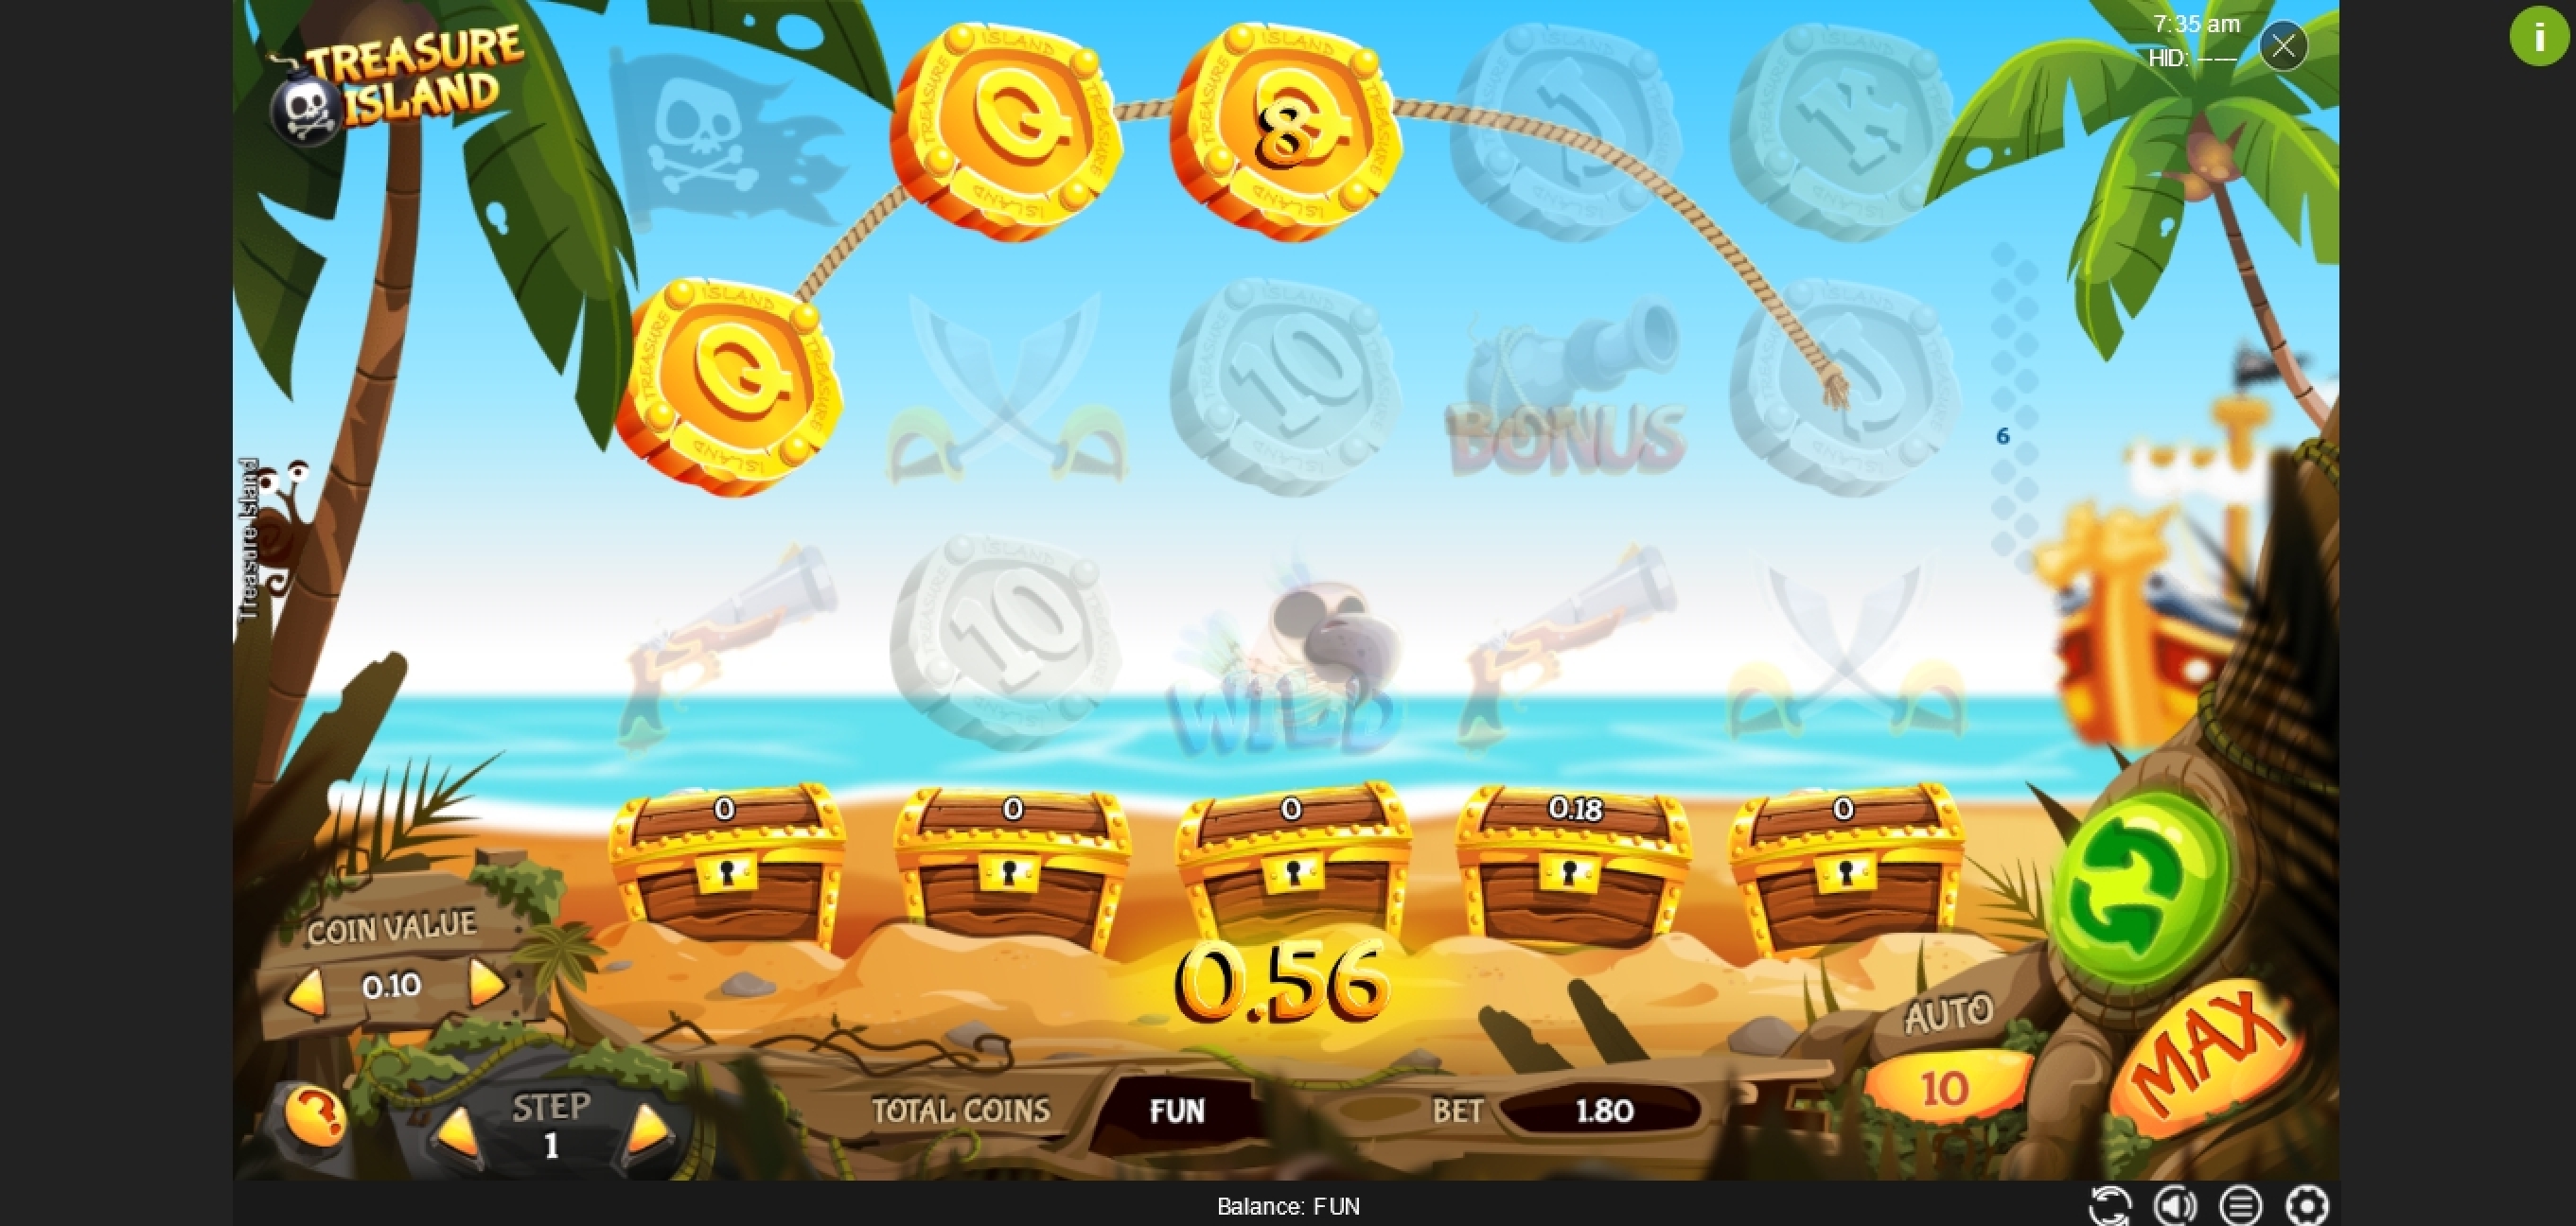 Win Money in Treasure Island Free Slot Game by Espresso Games